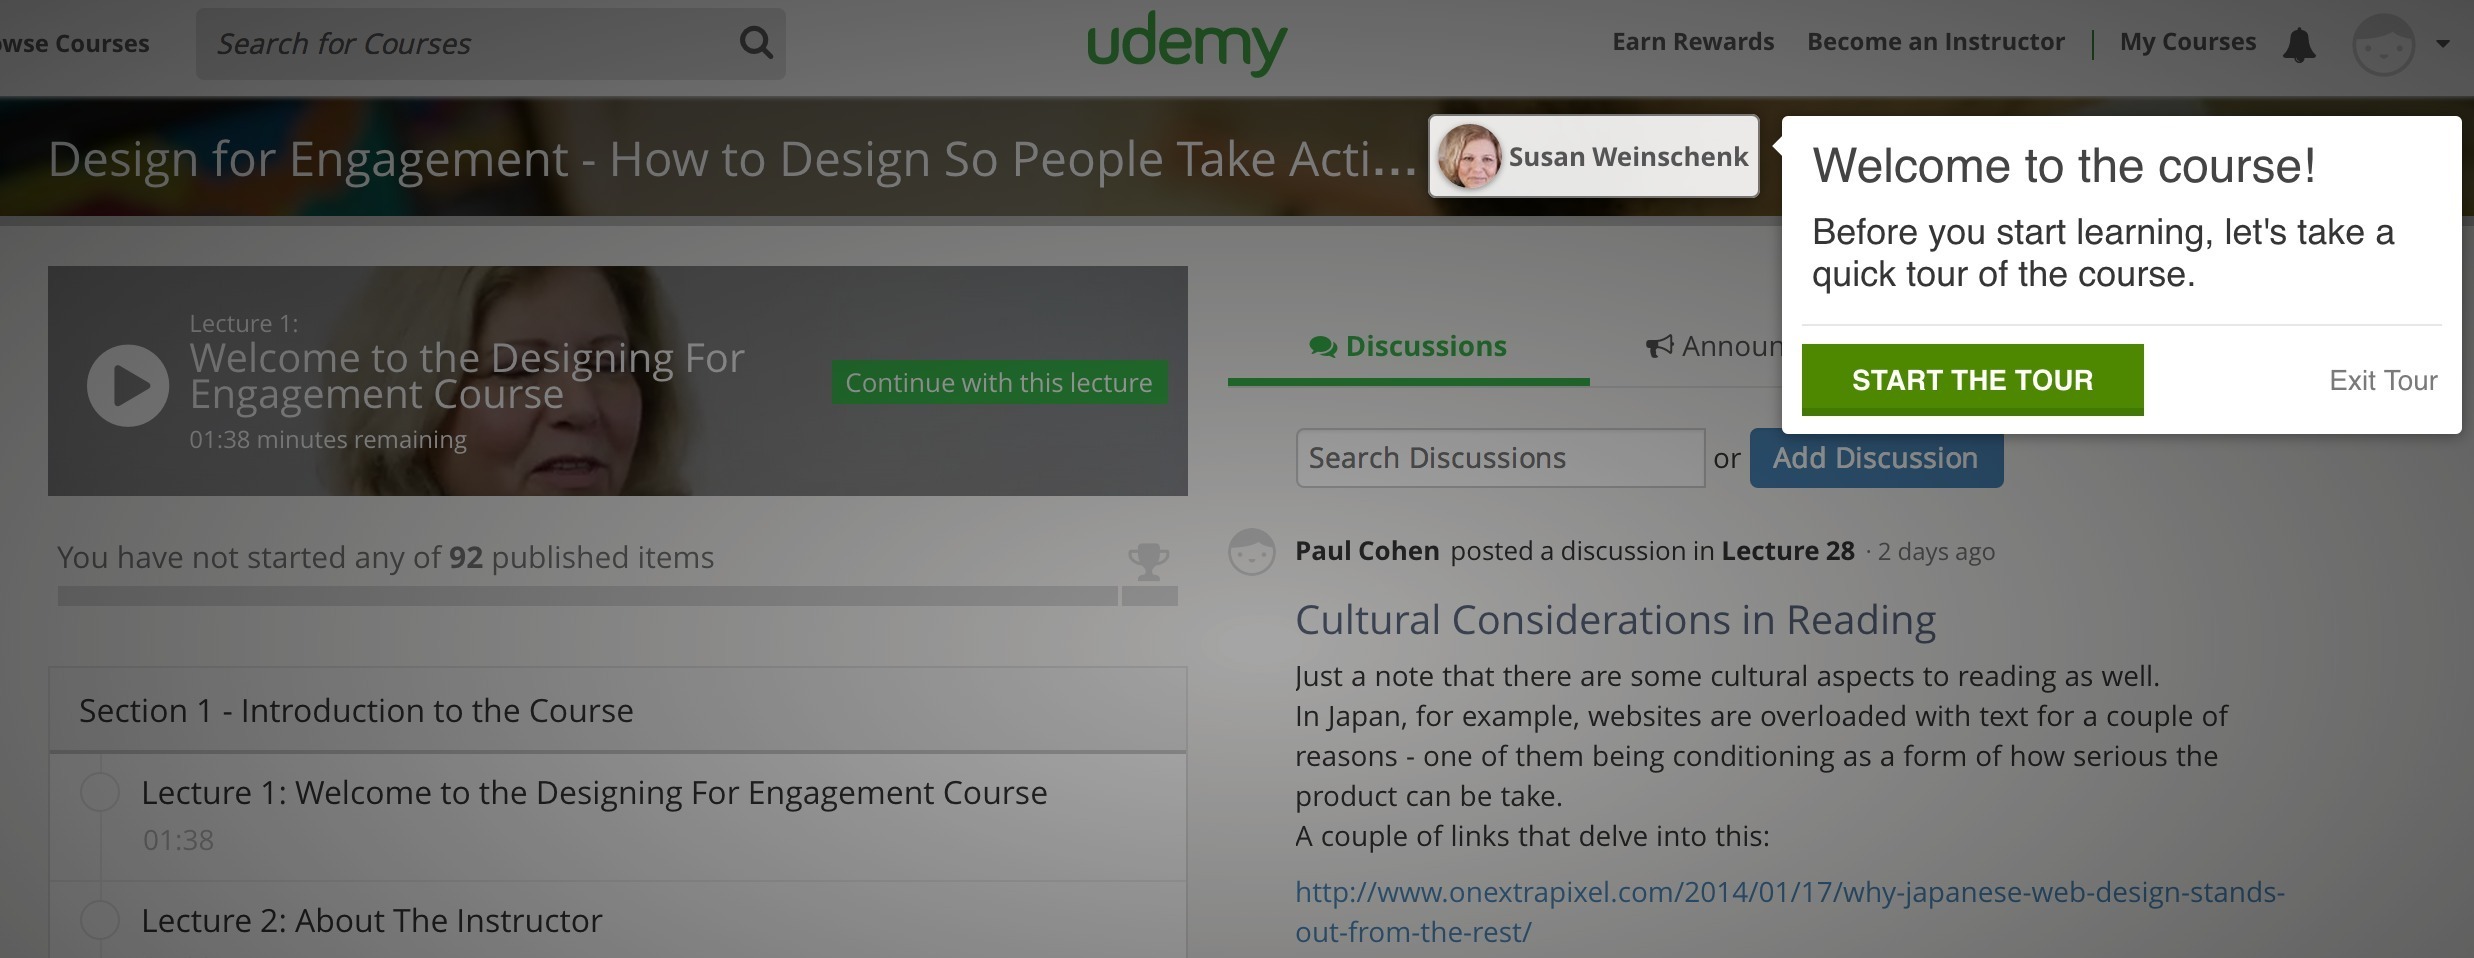 Screenshot of udemy.com